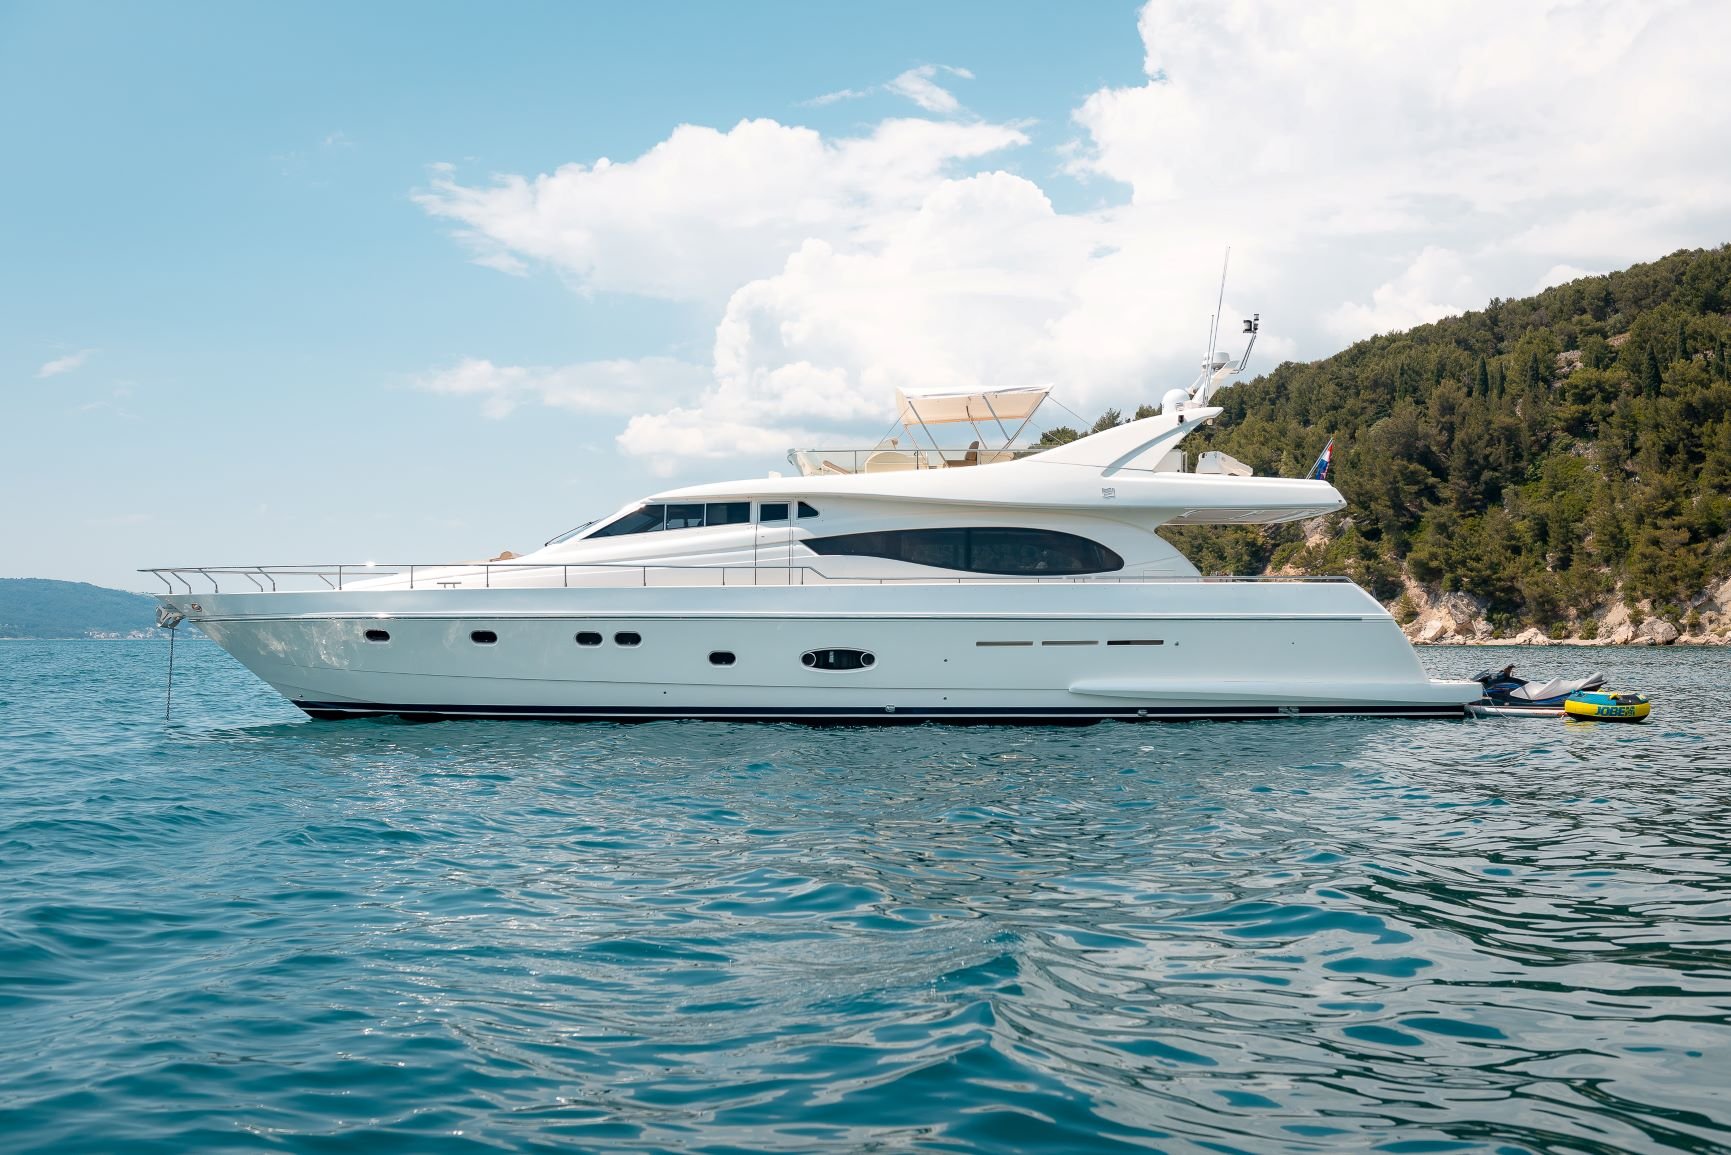 Luxury 4 cabin Motoryacht with crew for rent in Croatia